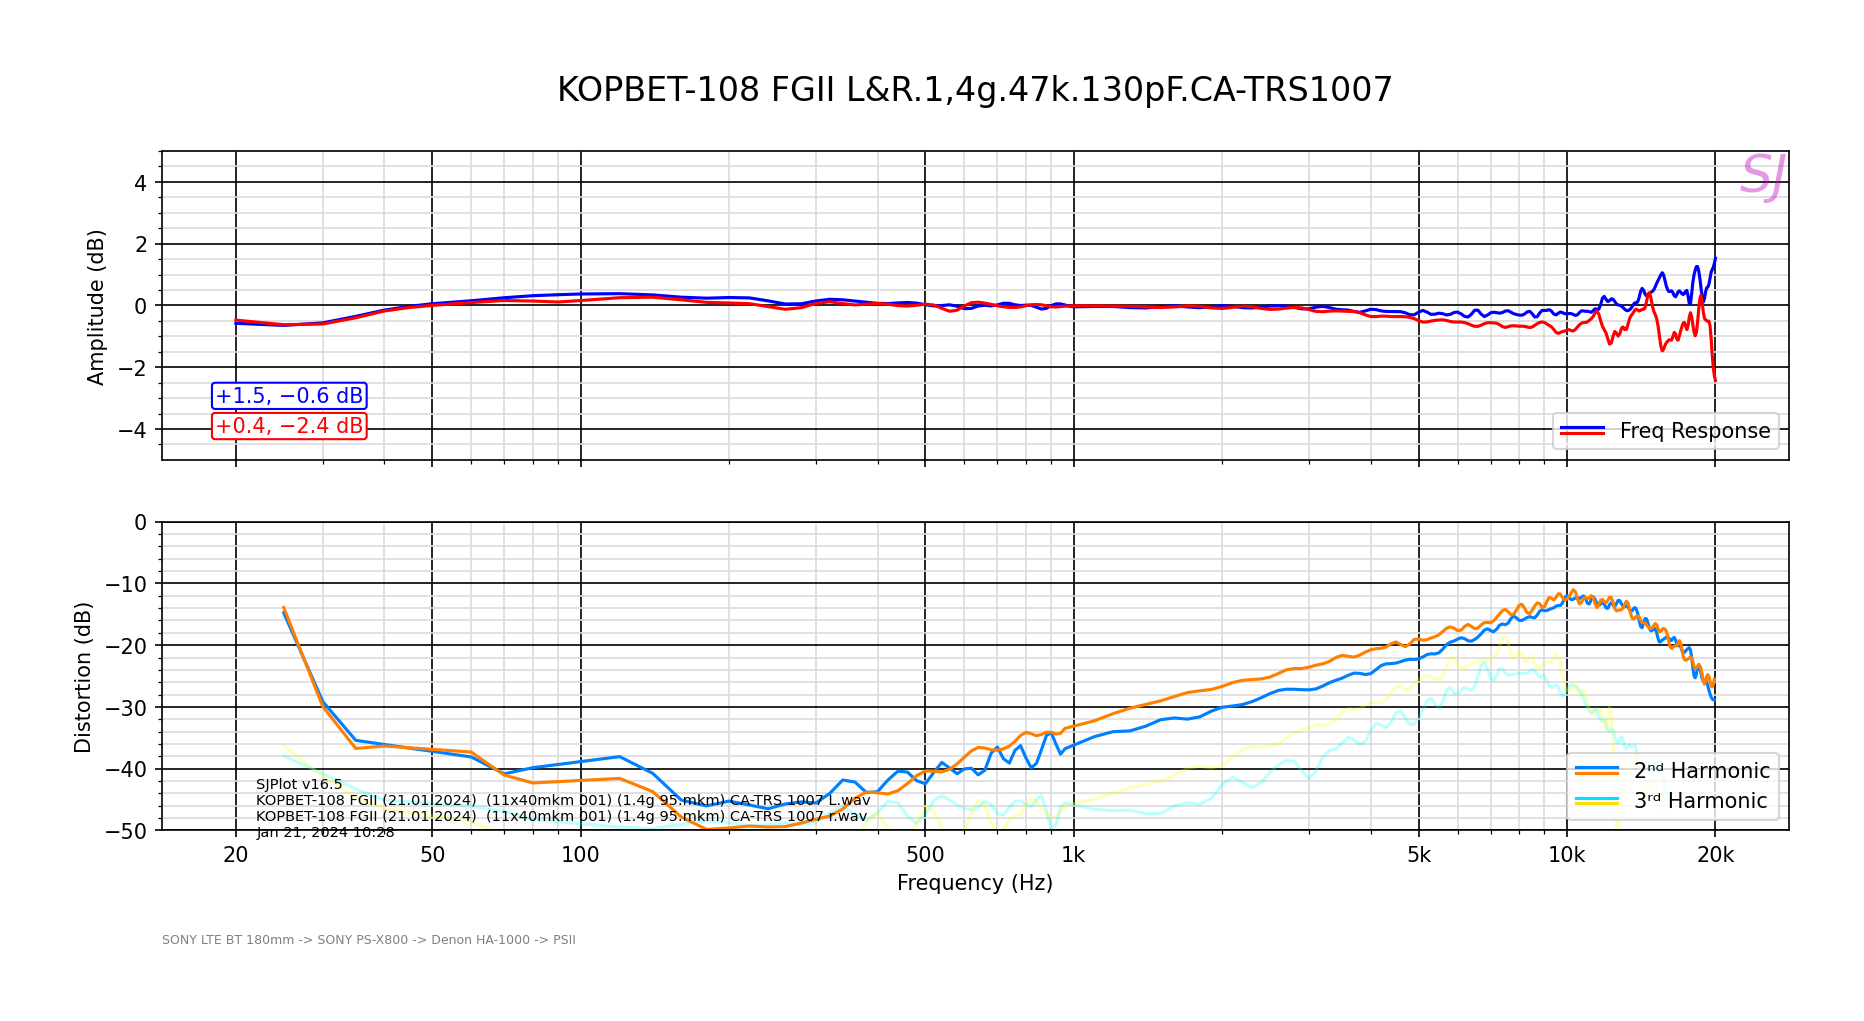 KOPBET-108 FGII (21.01.2024)  (11x40mkm 001) (1.4g 95.mkm) CA-TRS 1007 2.png